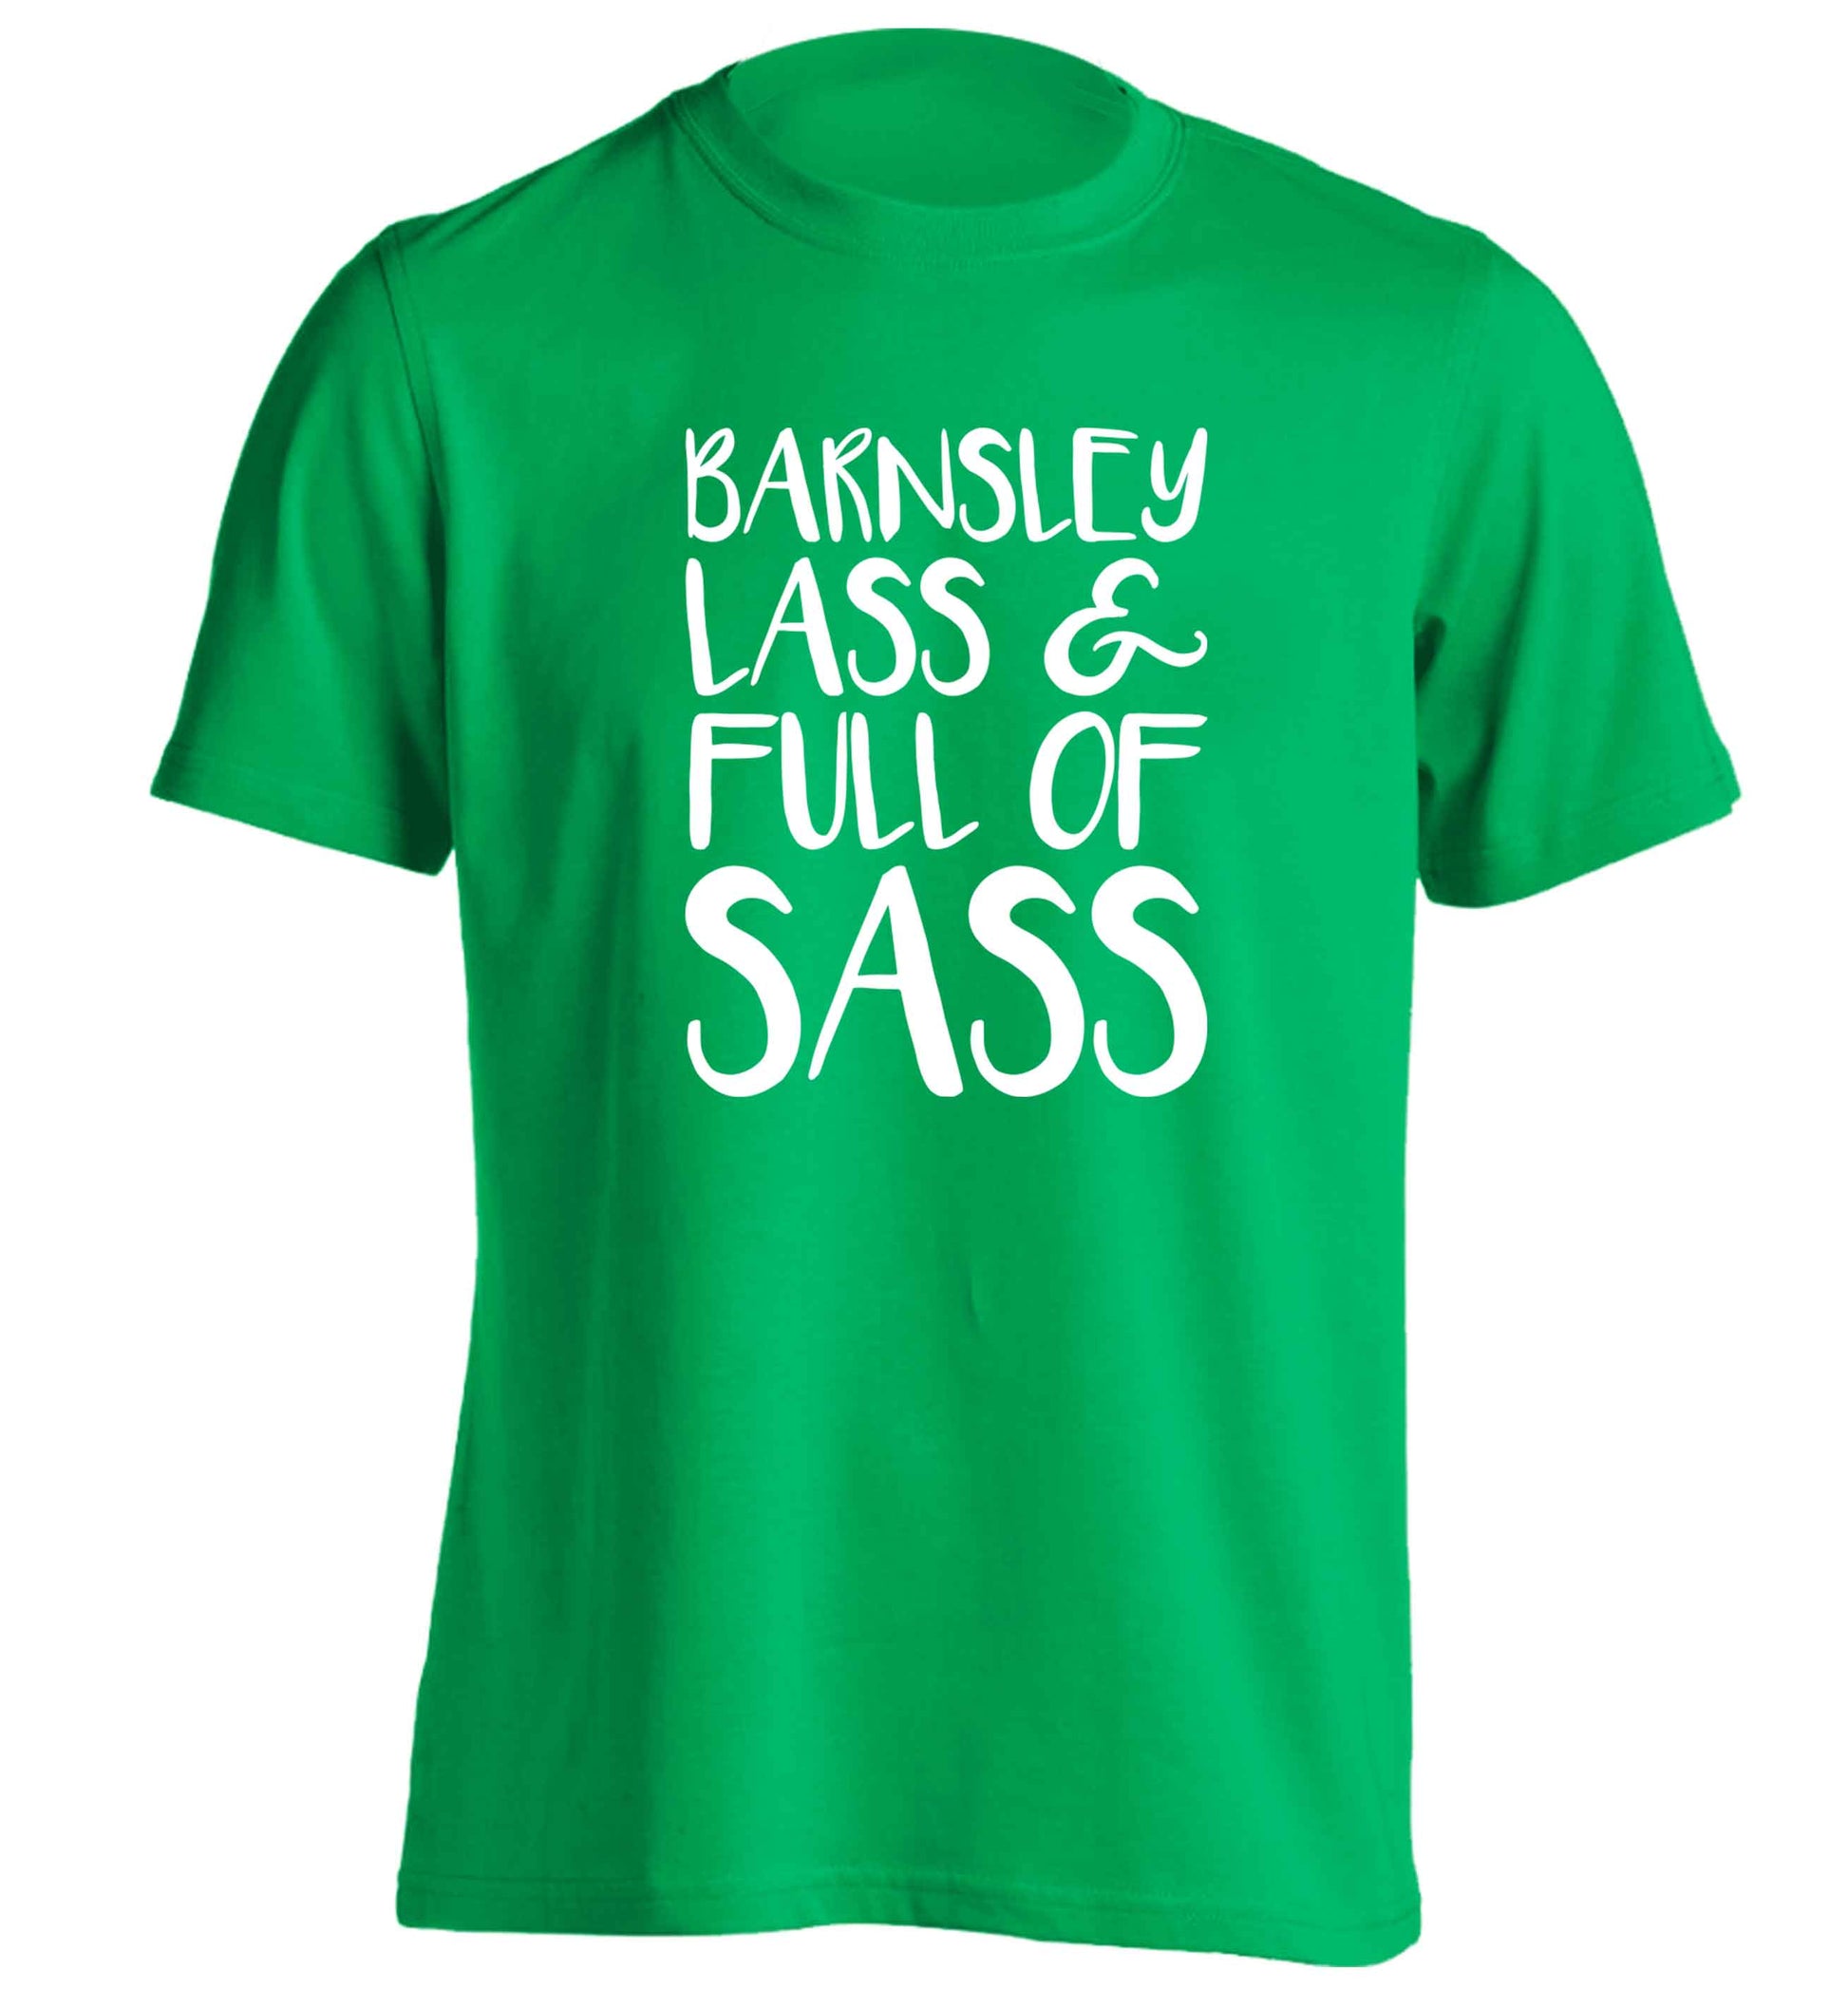 Barnsley lass and full of sass adults unisex green Tshirt 2XL